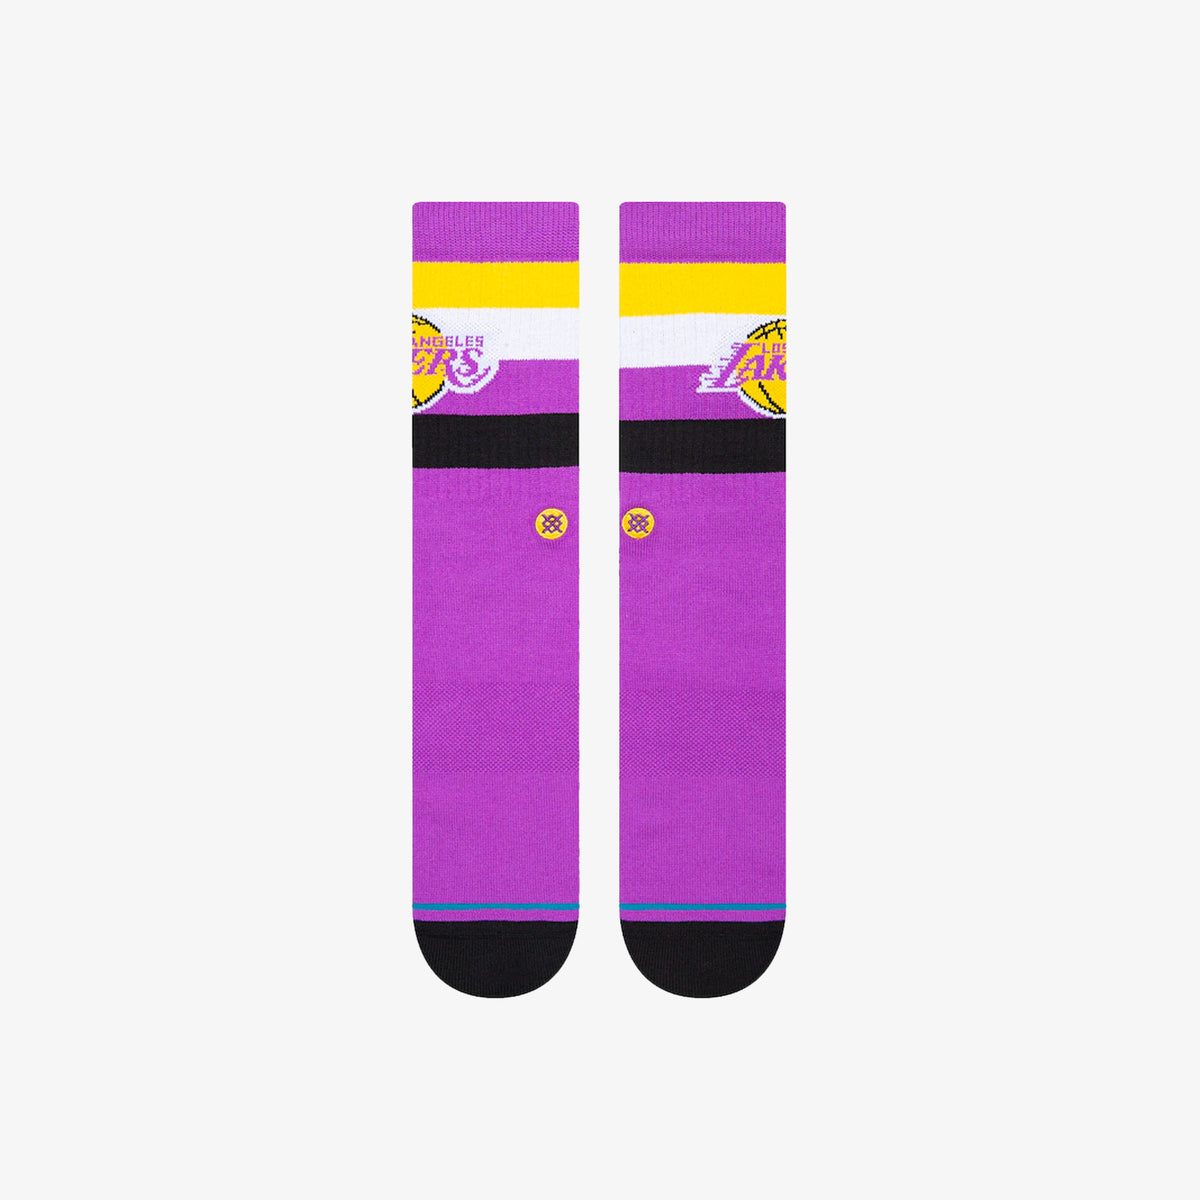 Los Angeles Lakers ST Crew Socks